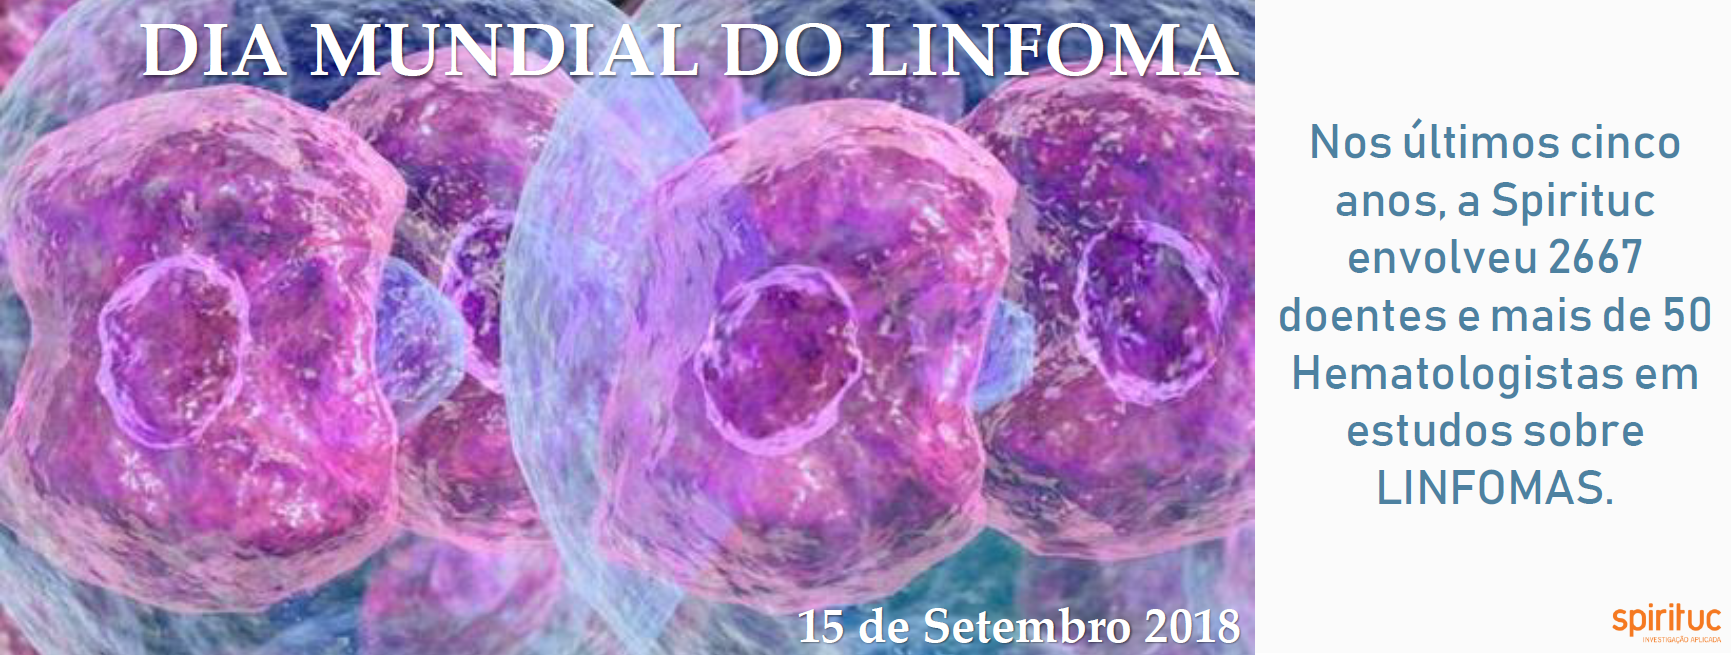 Dia Mundial do Linfoma - 15 Setembro